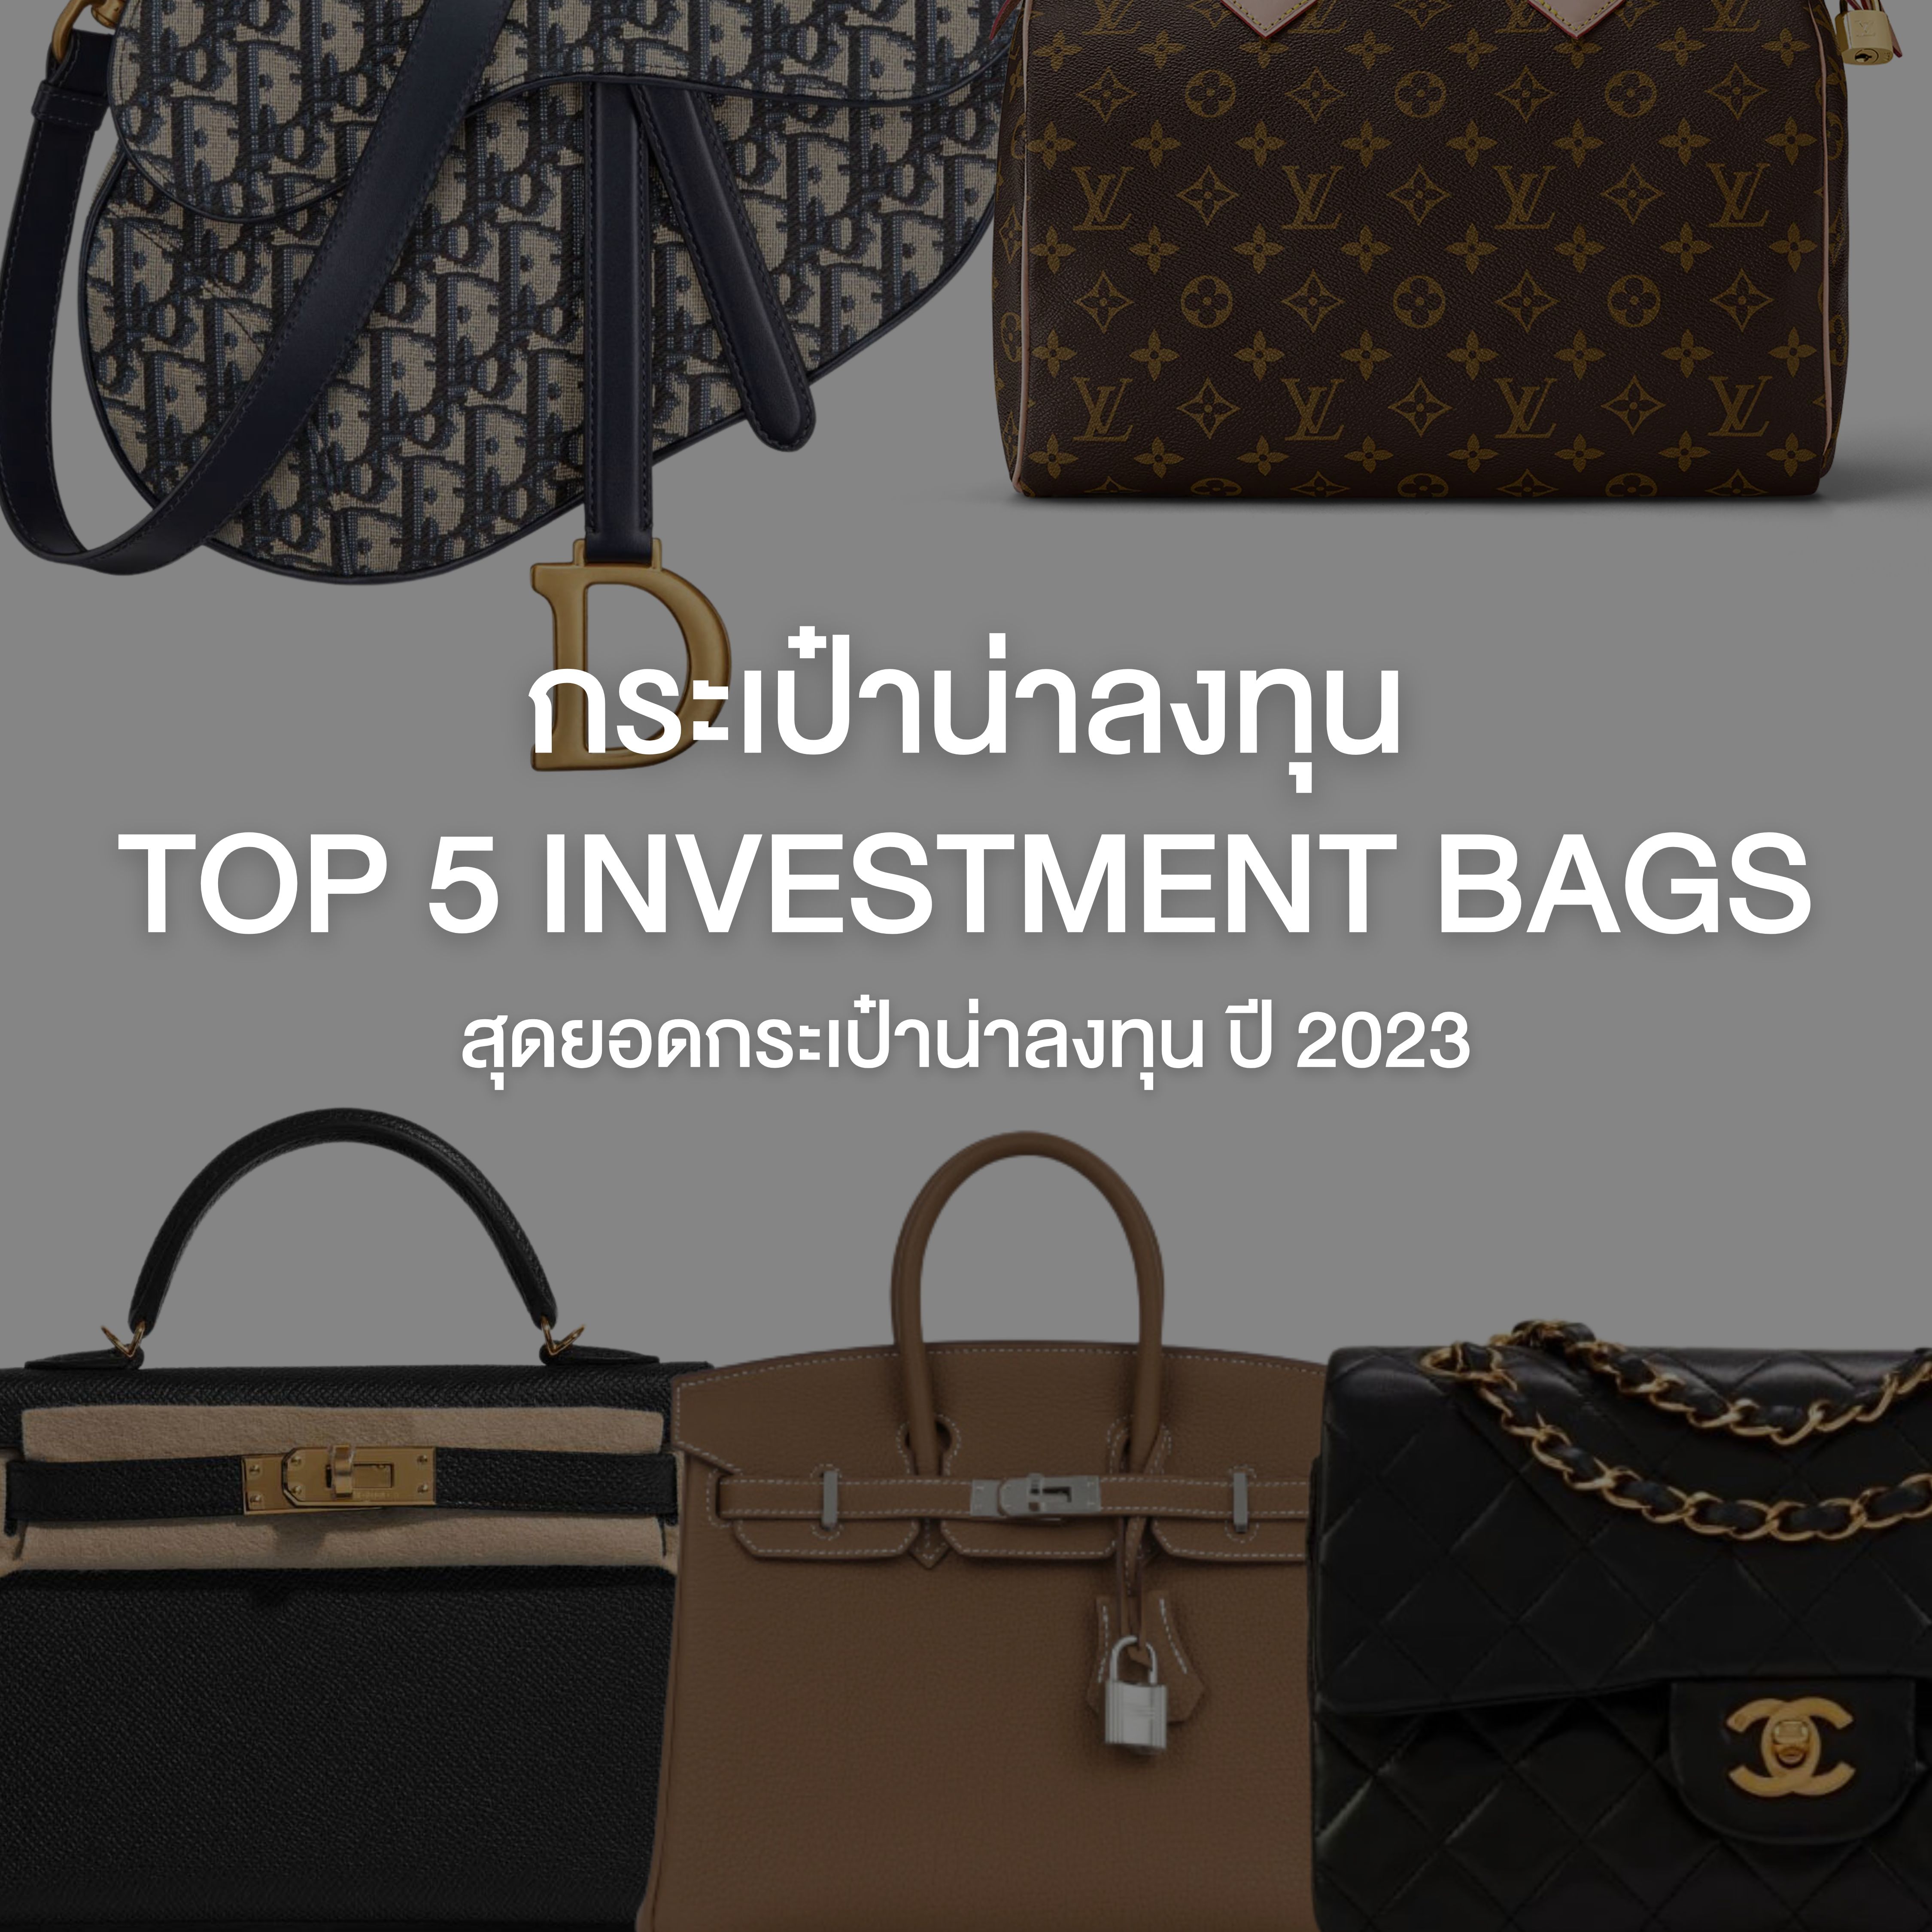 Top 5 Investment Bags สุดยอดกระเป๋าน่าลงทุน ปี 2023